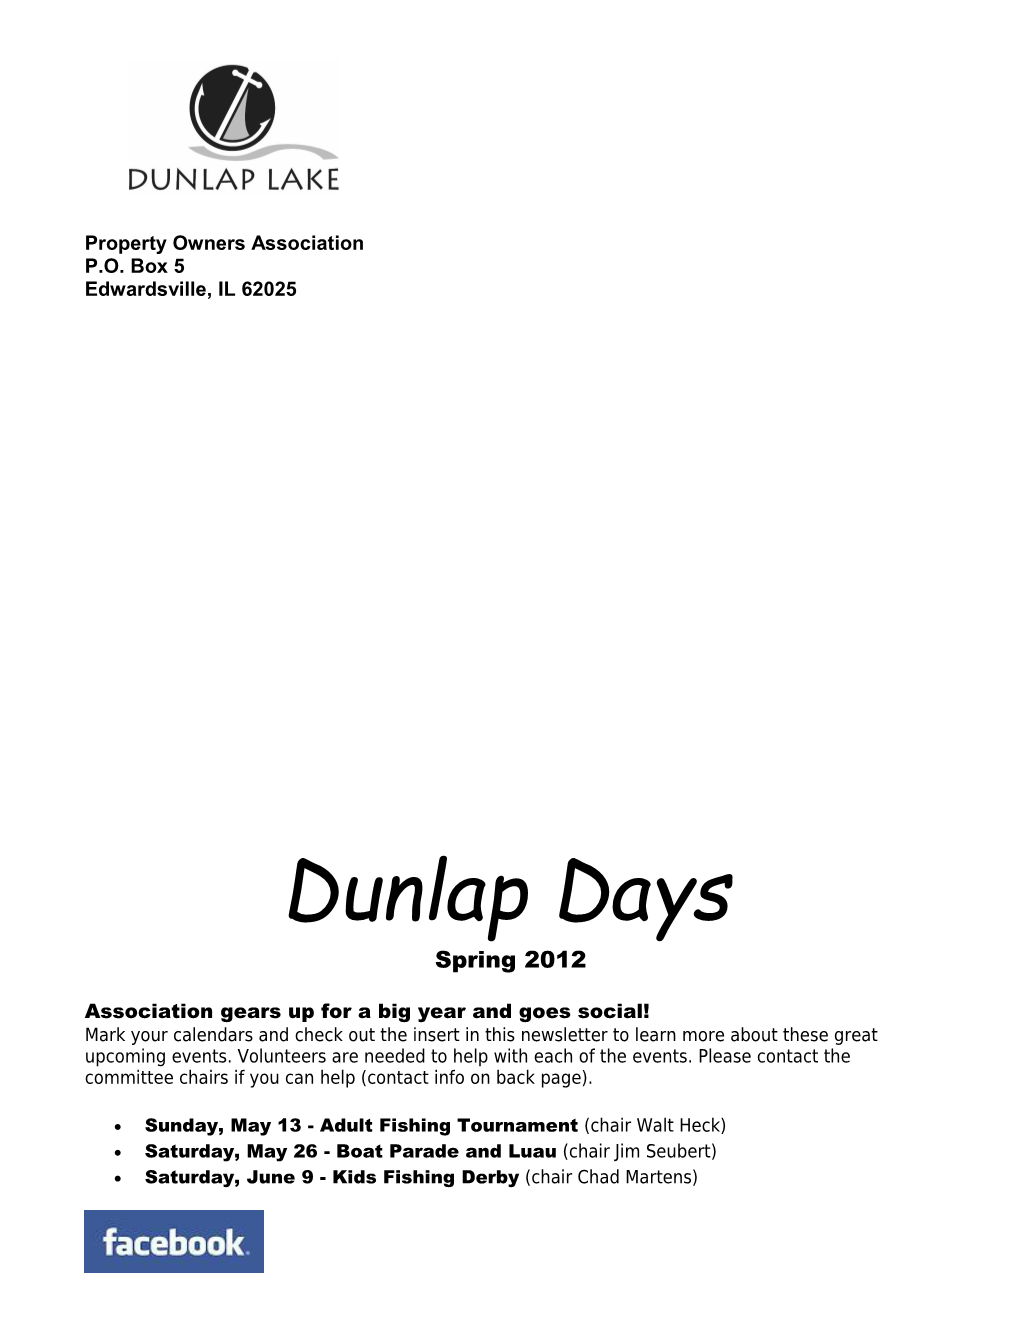 Dunlap Lake Property Owners Association